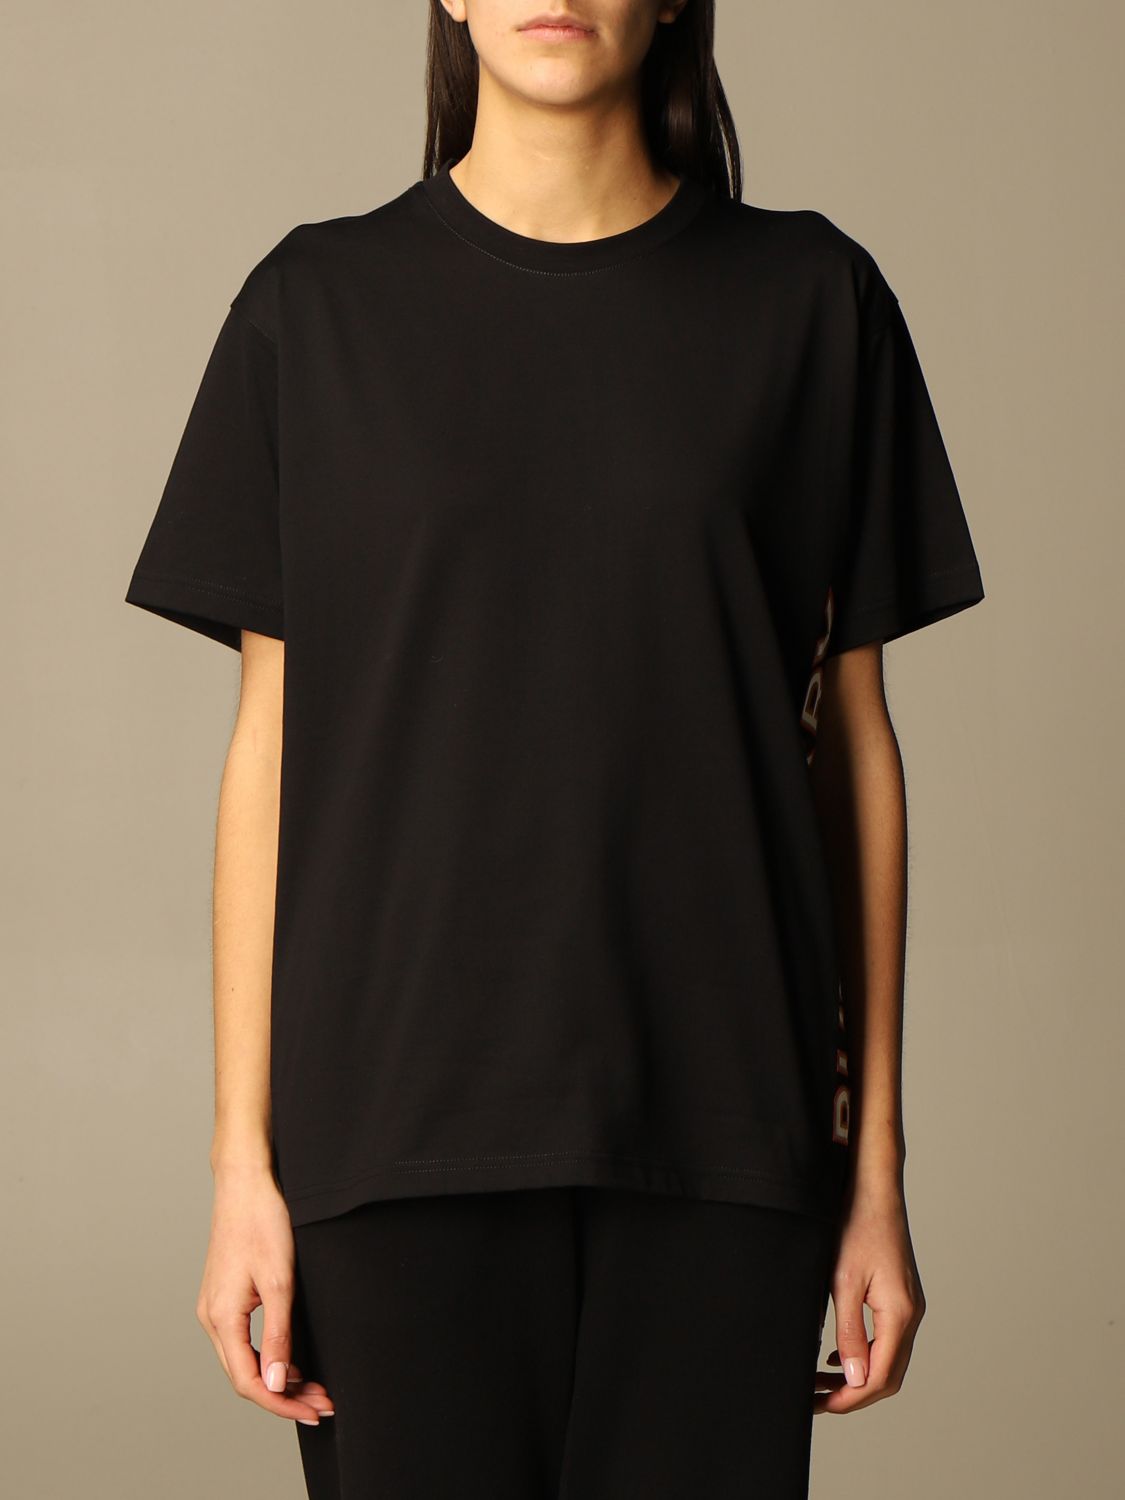 BURBERRY: Carrick logo t-shirt - Black | Burberry t-shirt 8037382 online on  